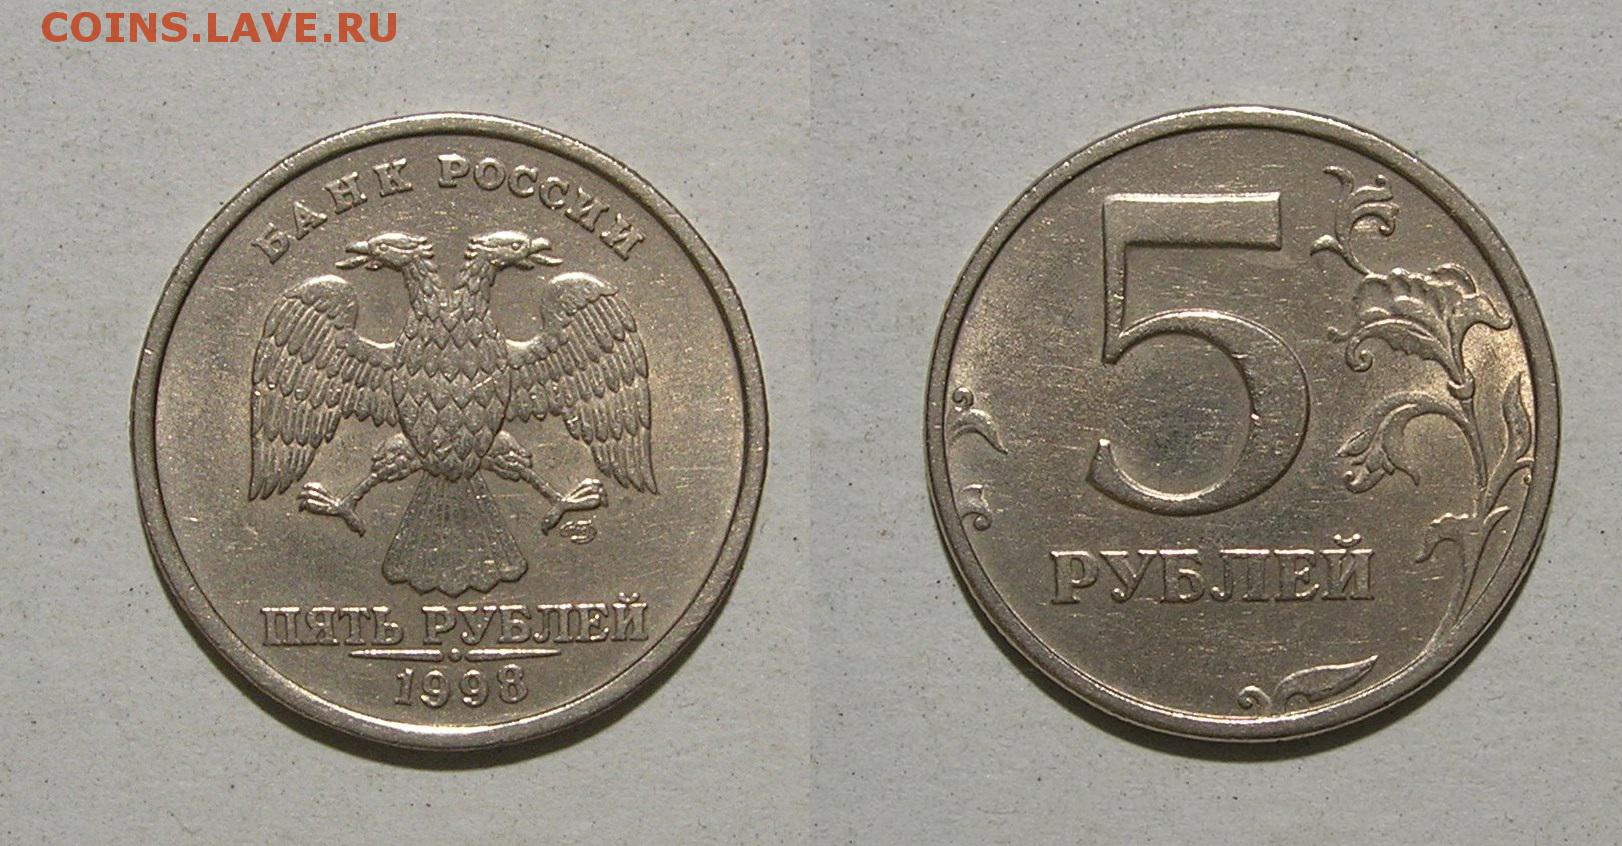 5 рублей 98 года. 5 Рублей 1997 СПМД шт 3. Монета 5 рублей 1997 ММД. 5 Рублей 1997 СПМД монетник. 5 Рублей 1998 вес.